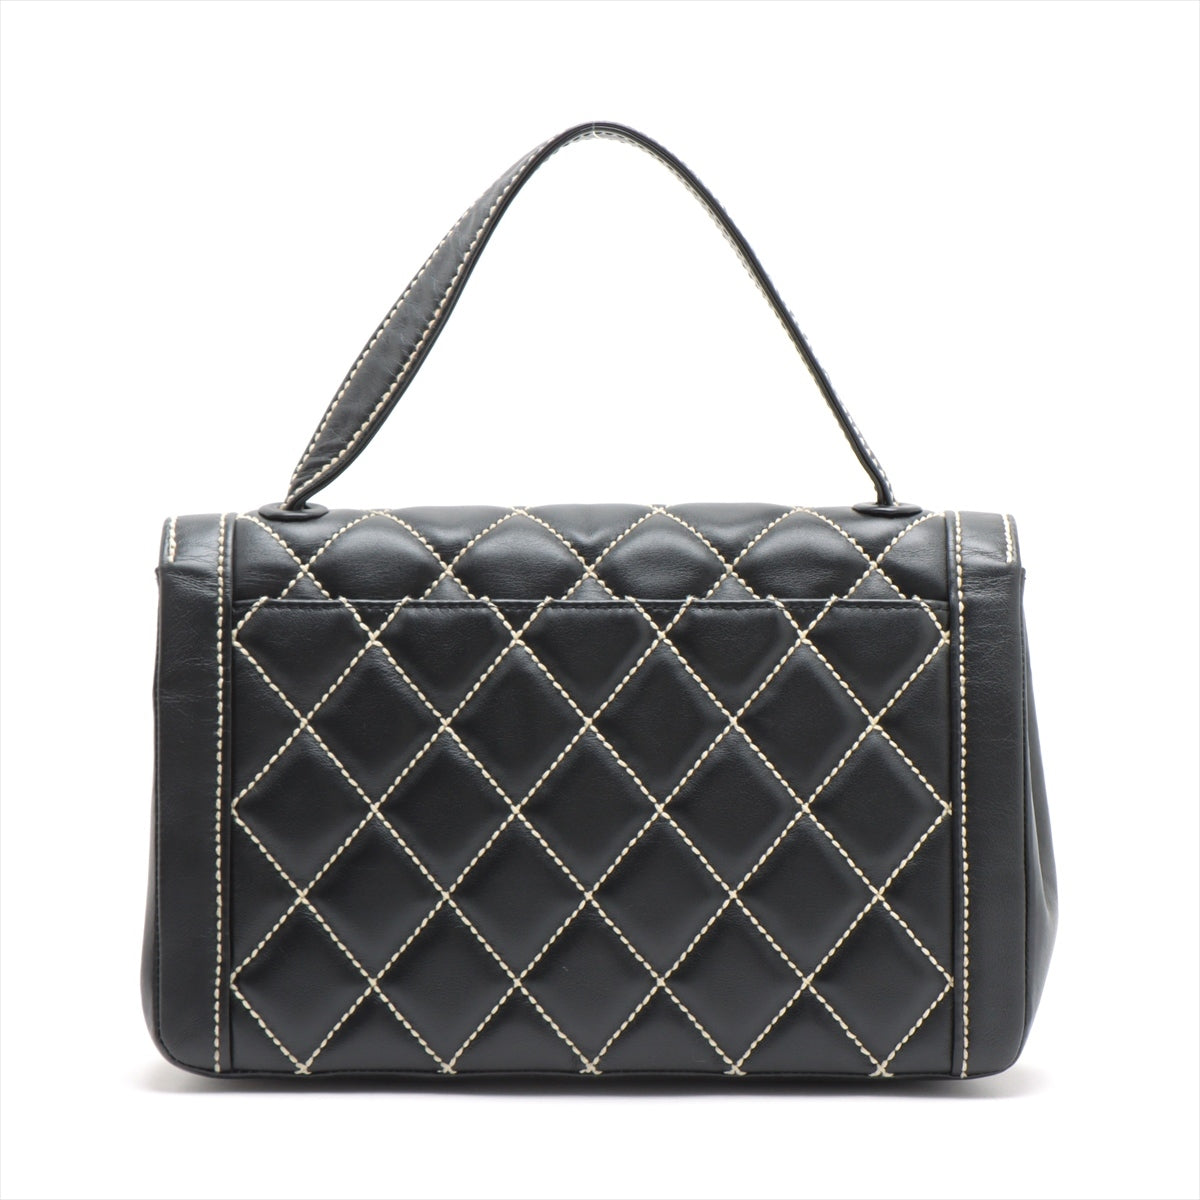 Chanel Wild Stitch Lambskin Handbag Black Gold Metal Fittings 9XXXXXX